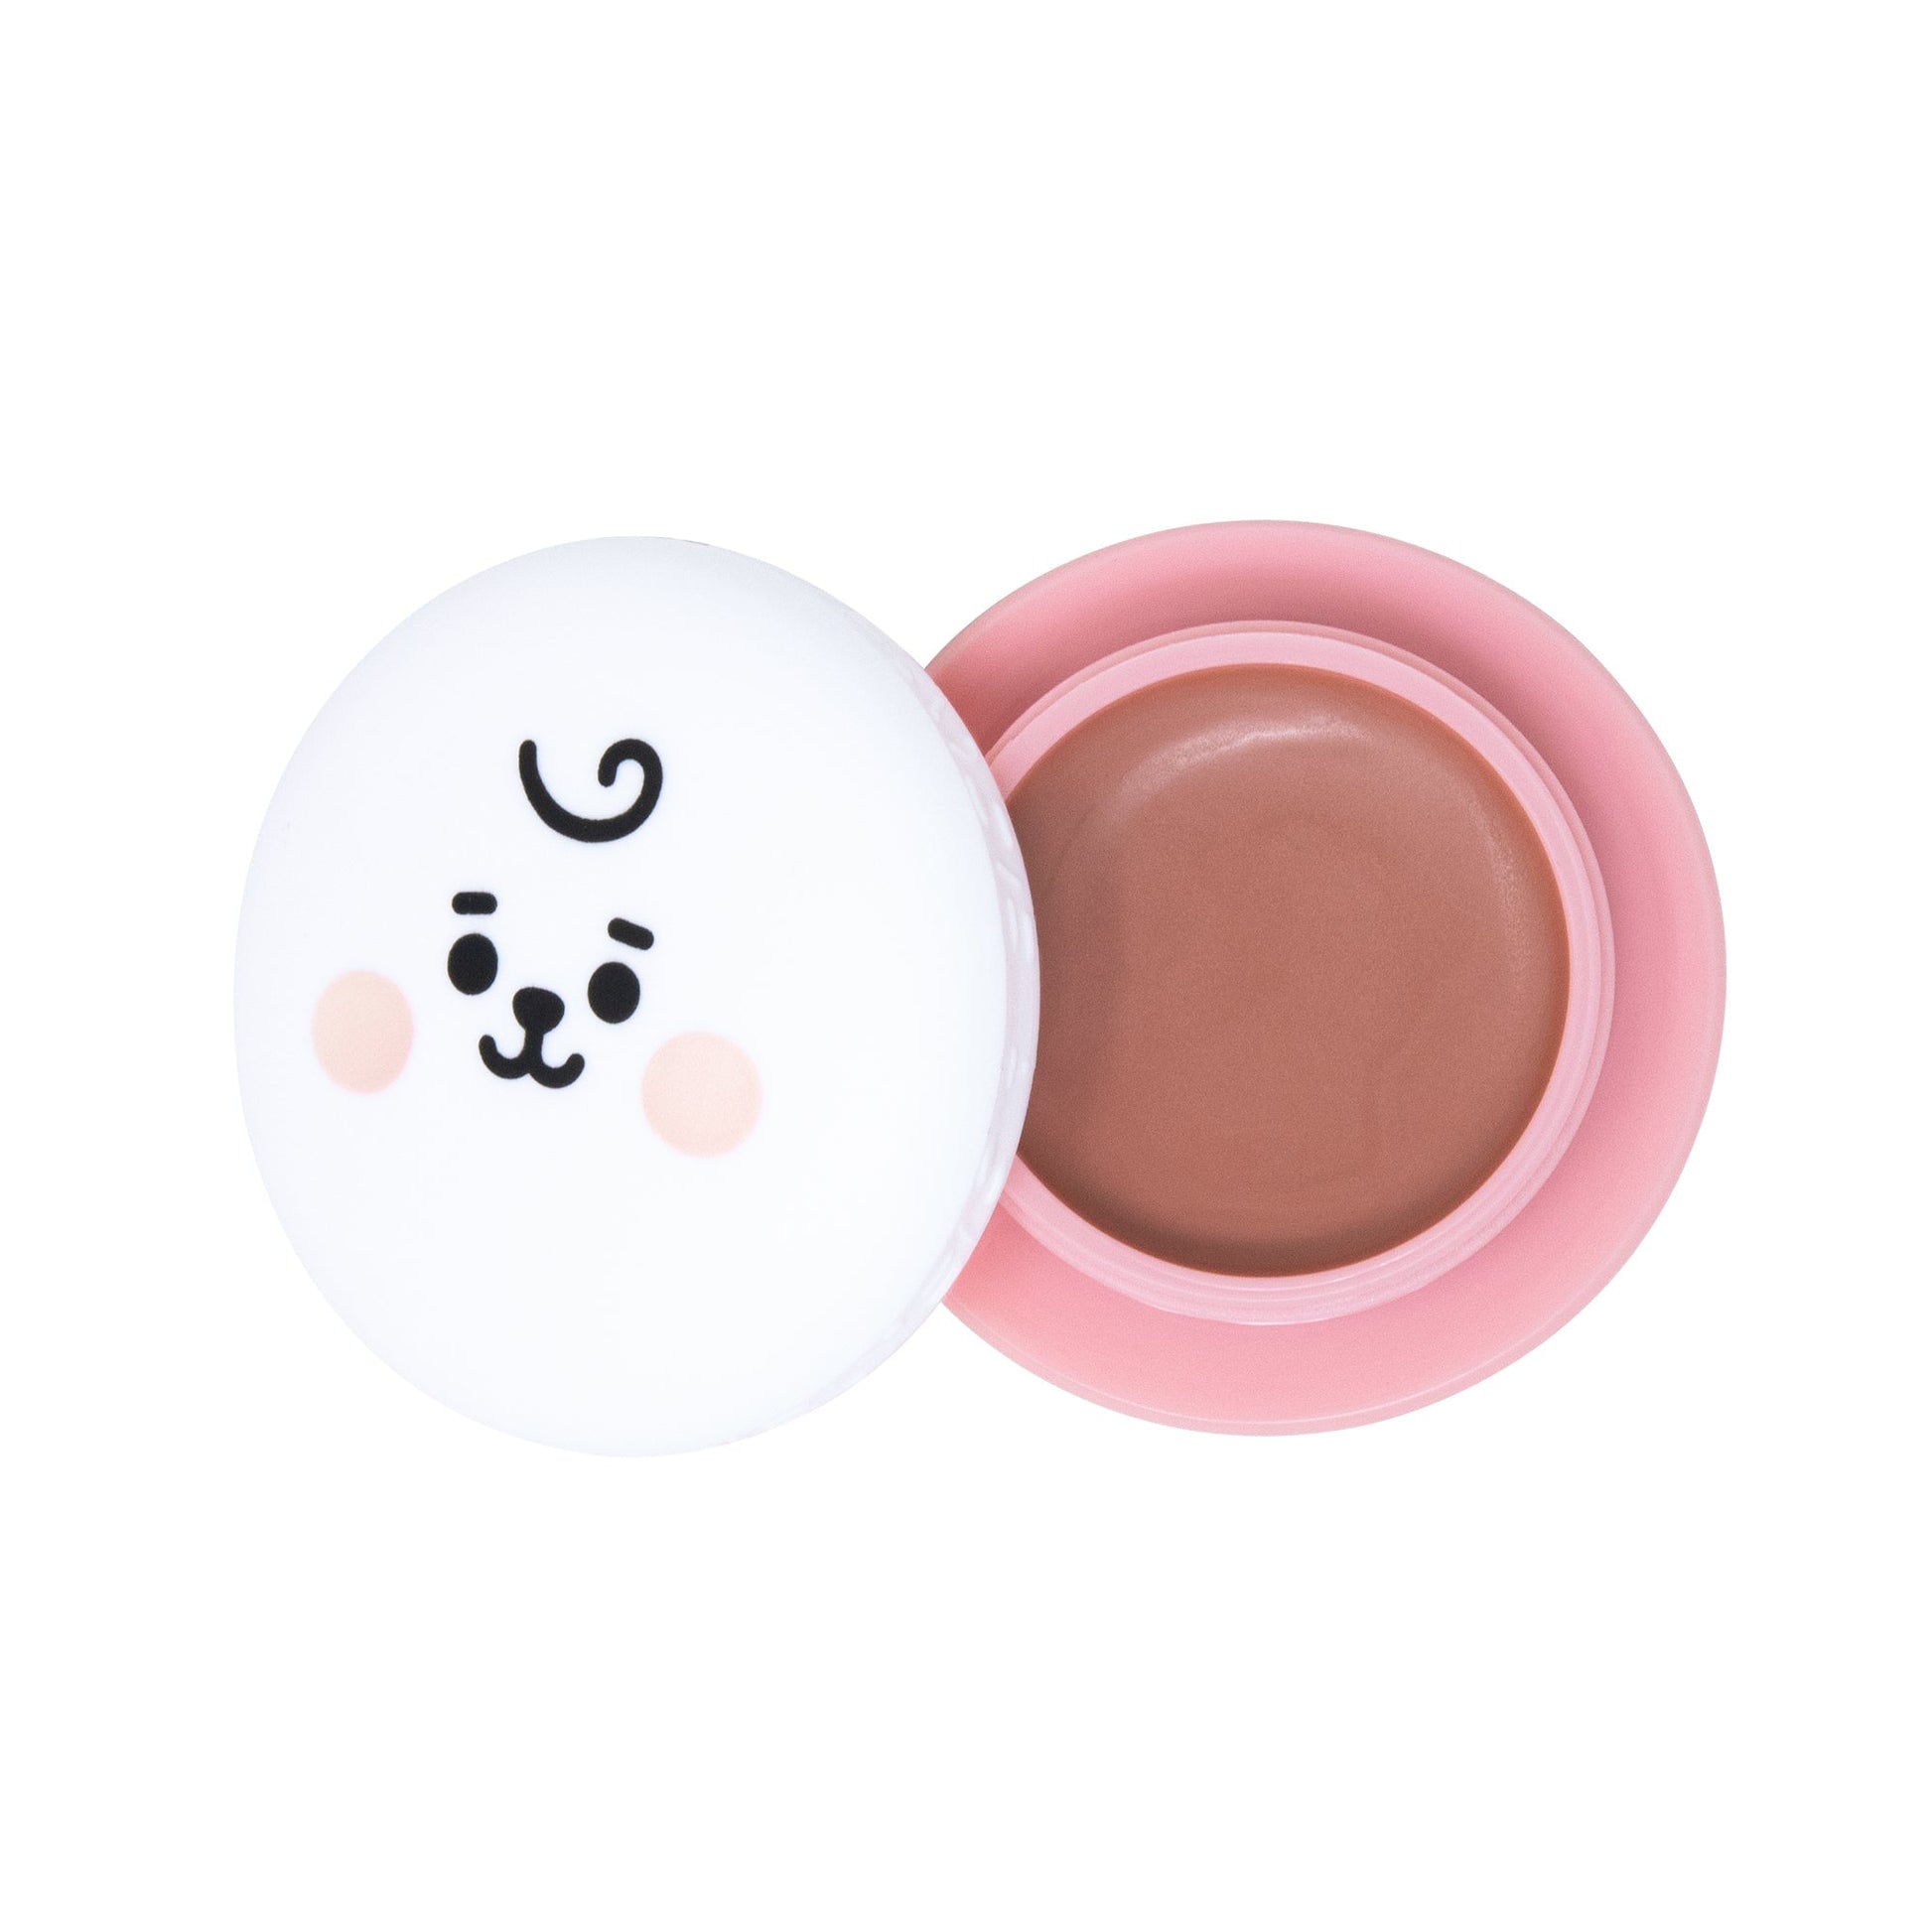 Hello Kitty & BT21 RJ Moisturizing Macaron Lip Balm Duo, Honeydew flavored